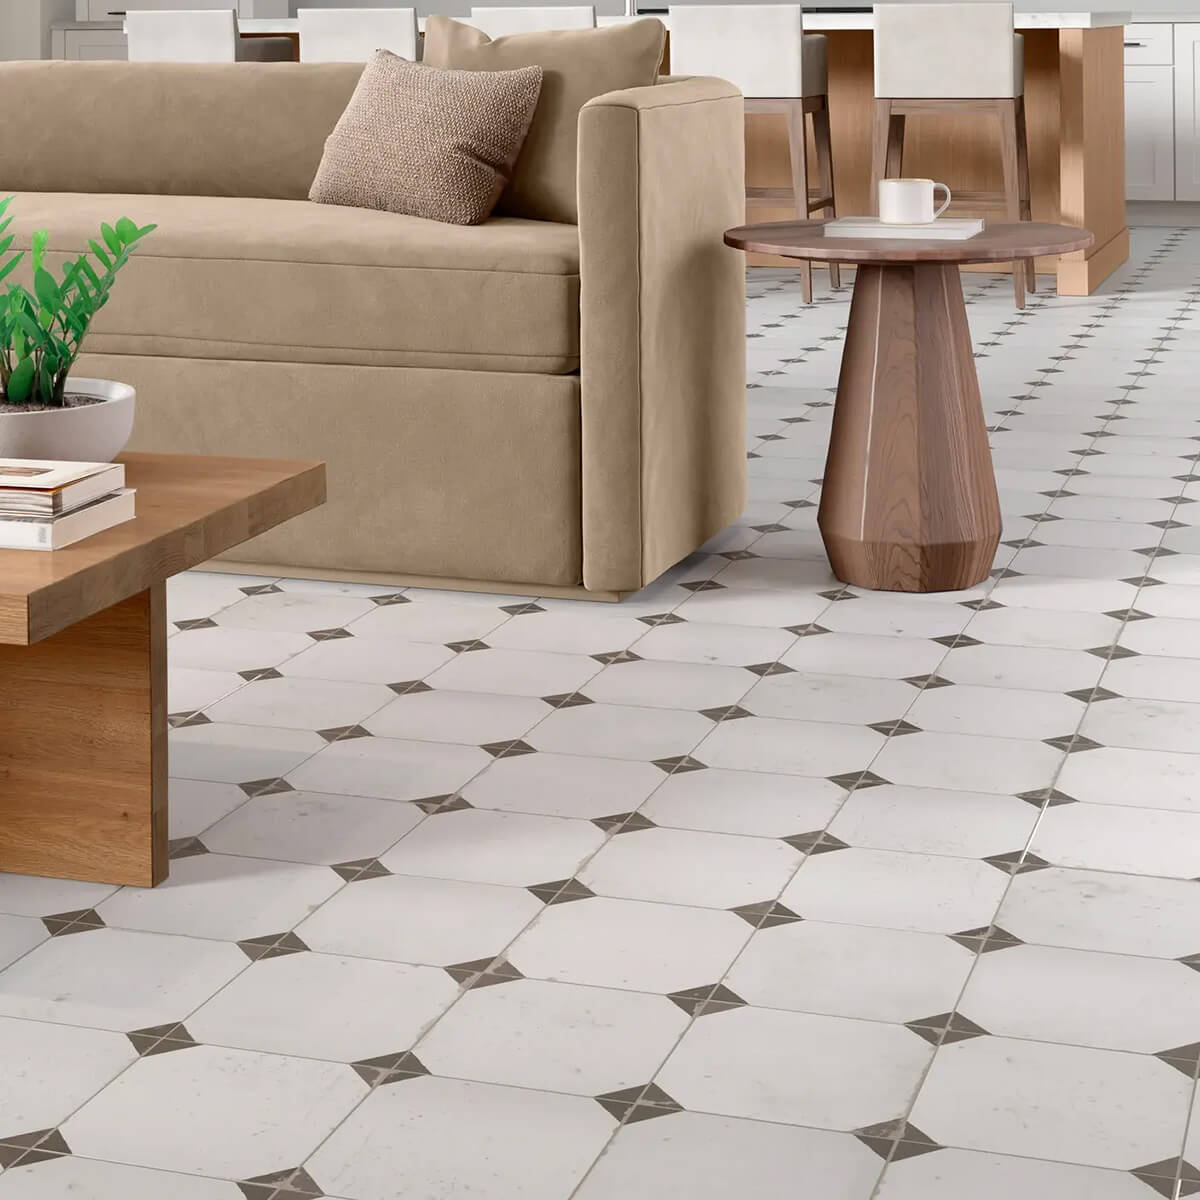 Tile flooring for living area | CarpetsPlus COLORTILE of Wyoming